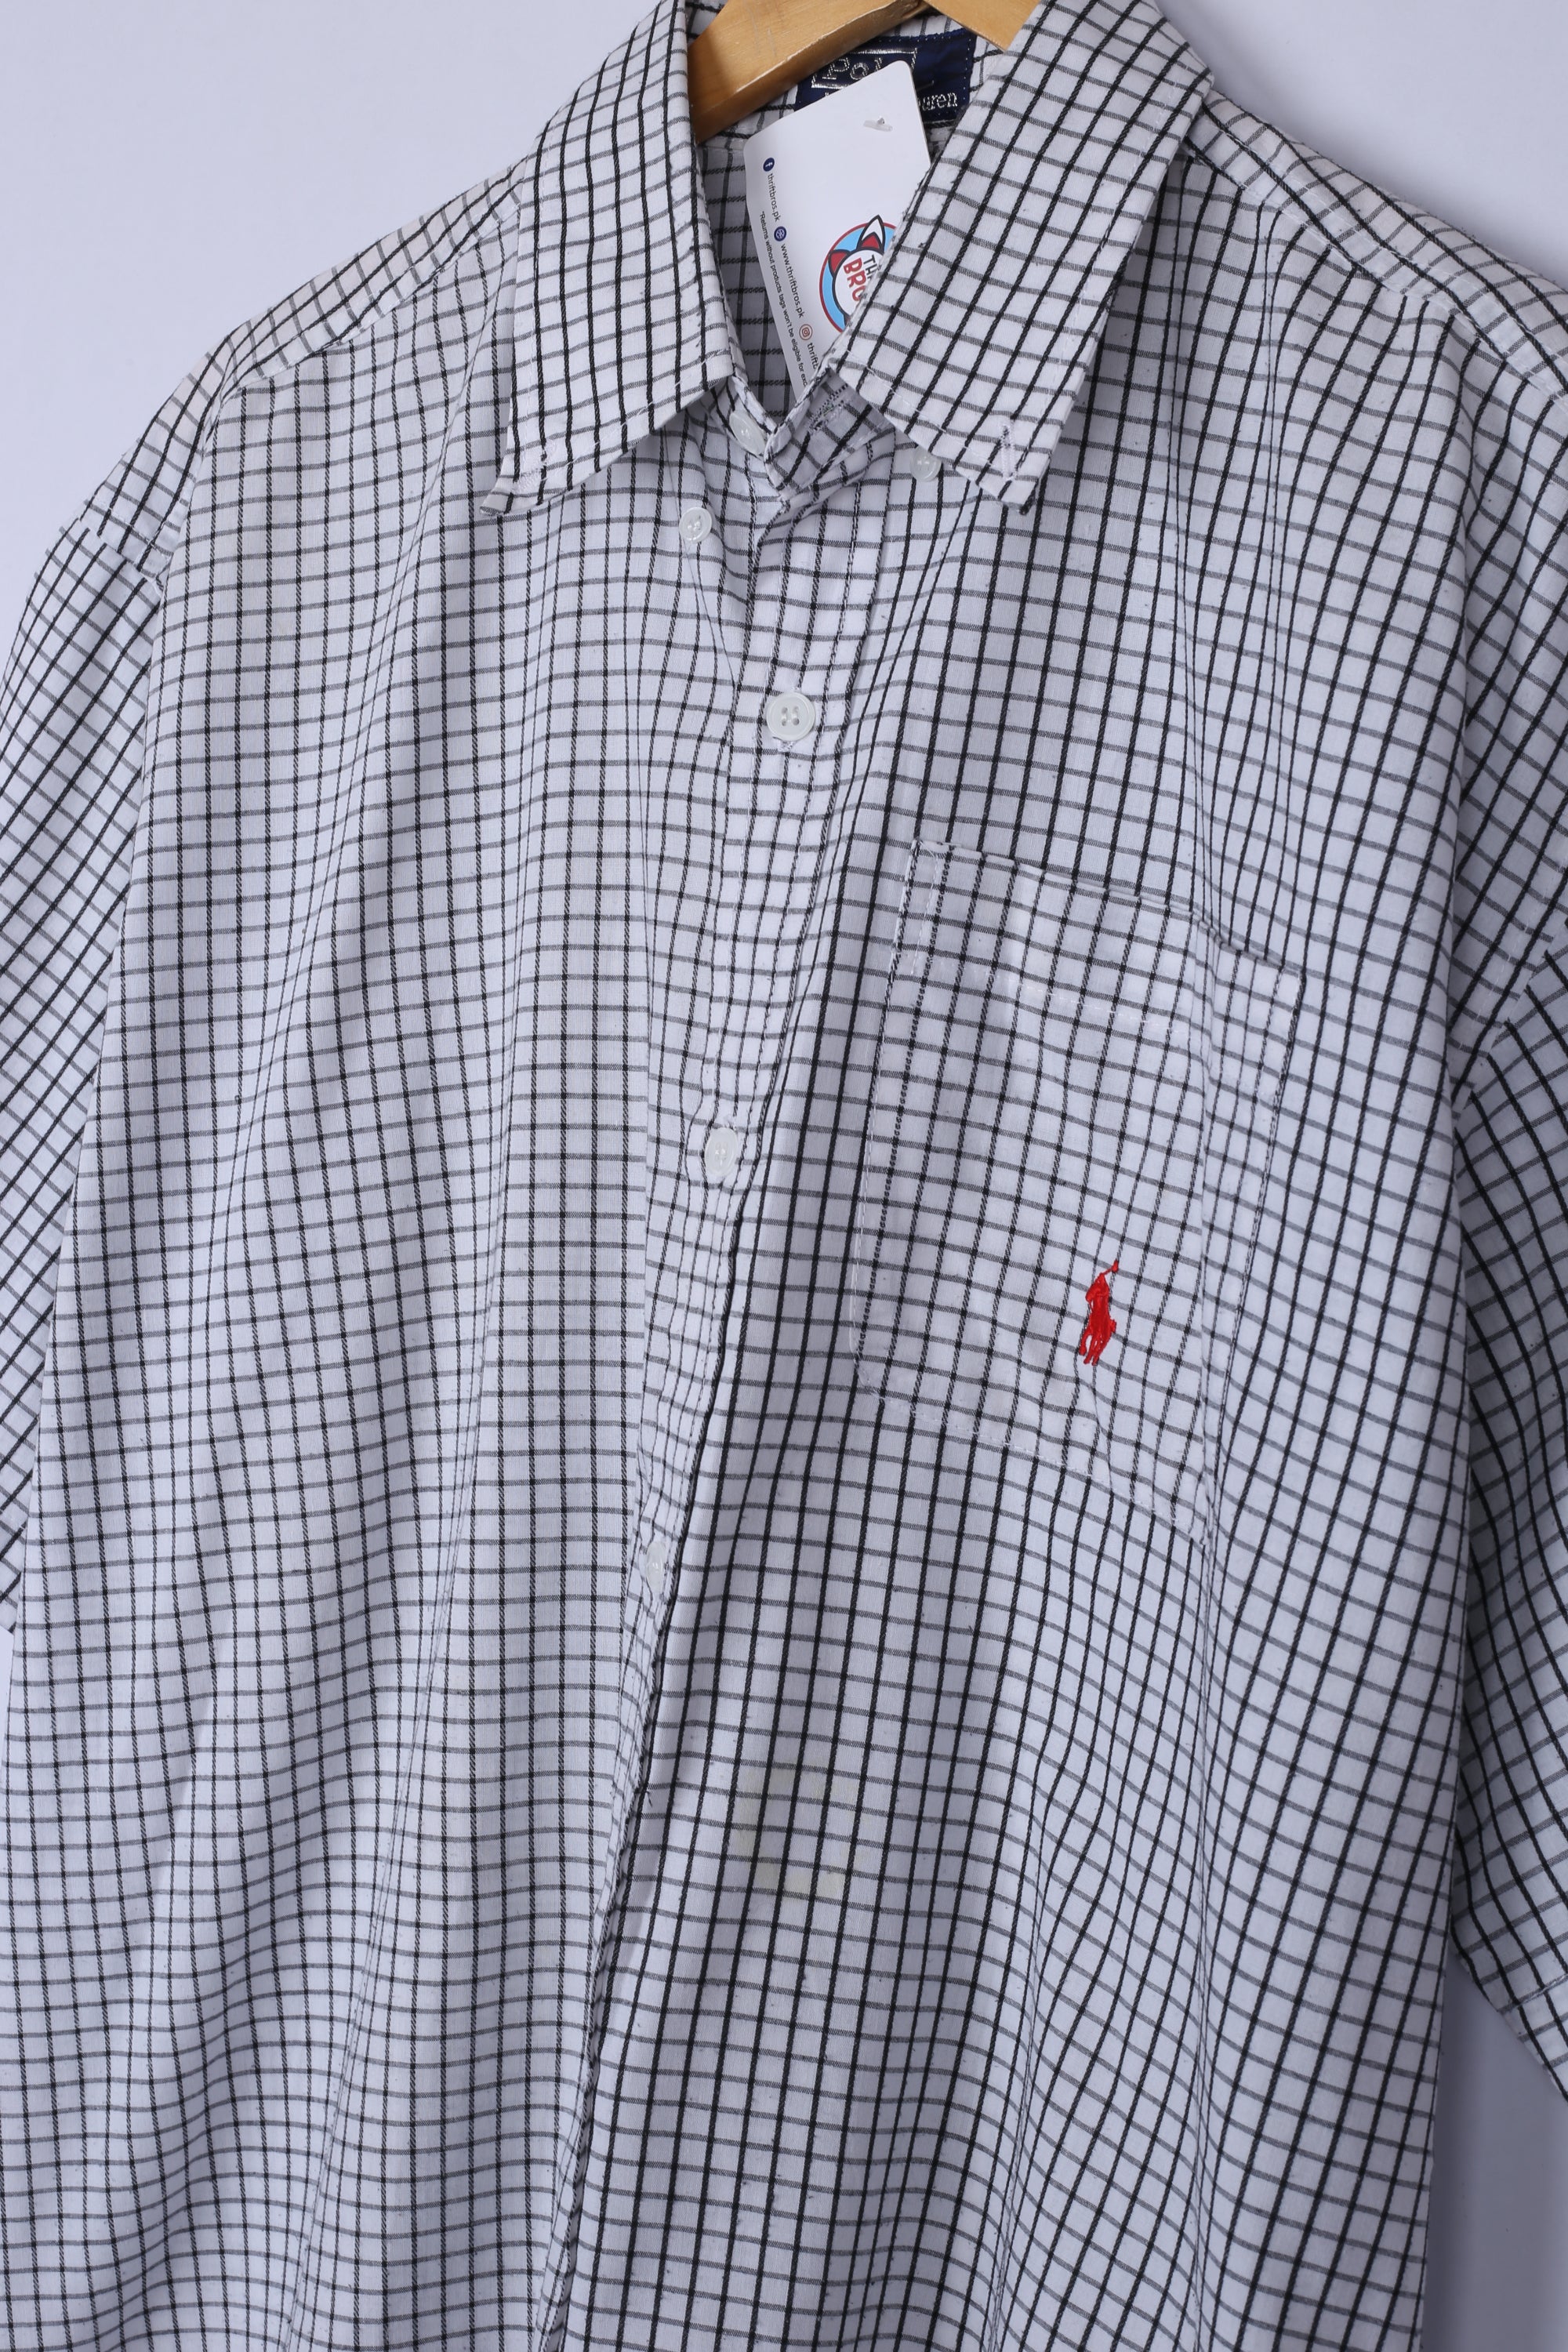 Vintage Ralph Lauren Shirt Checkered